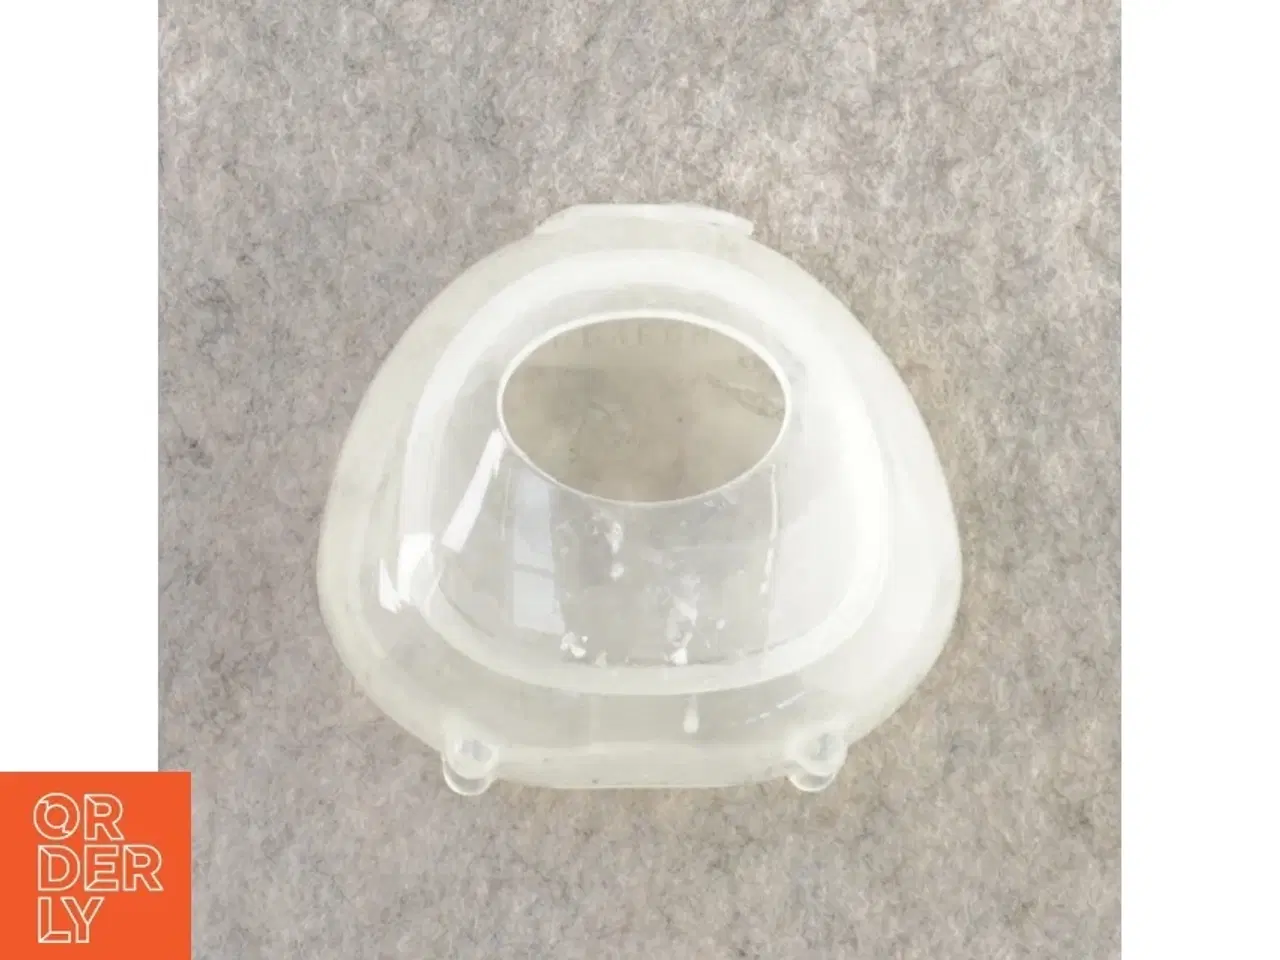 Billede 1 - Ladybug silicone breast milk collector fra Haakaa (str. 9 x 9 x 6 cm)